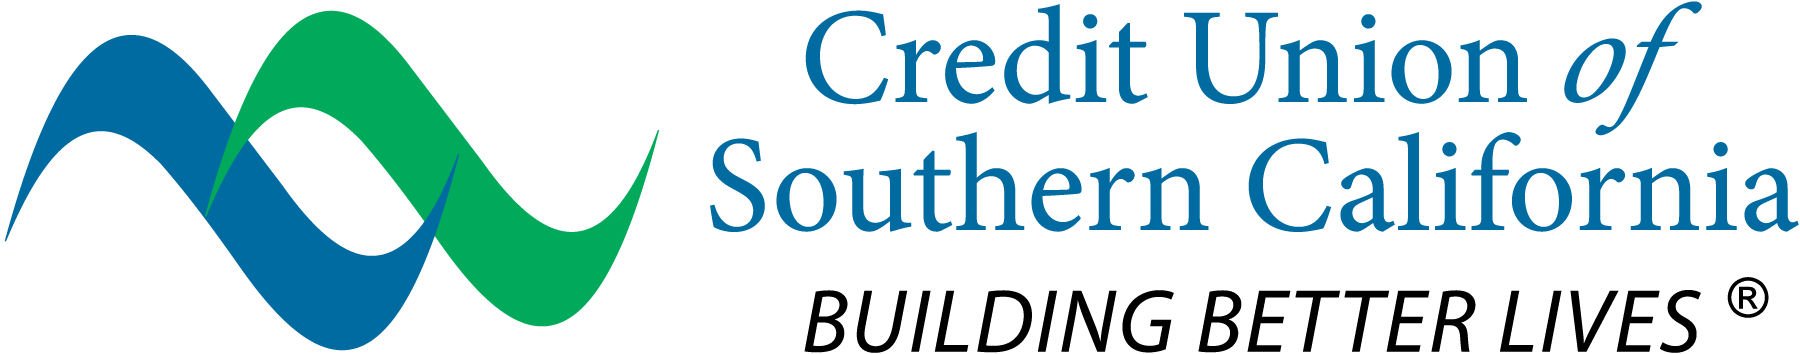 Credit Union of Southern California Company Logo